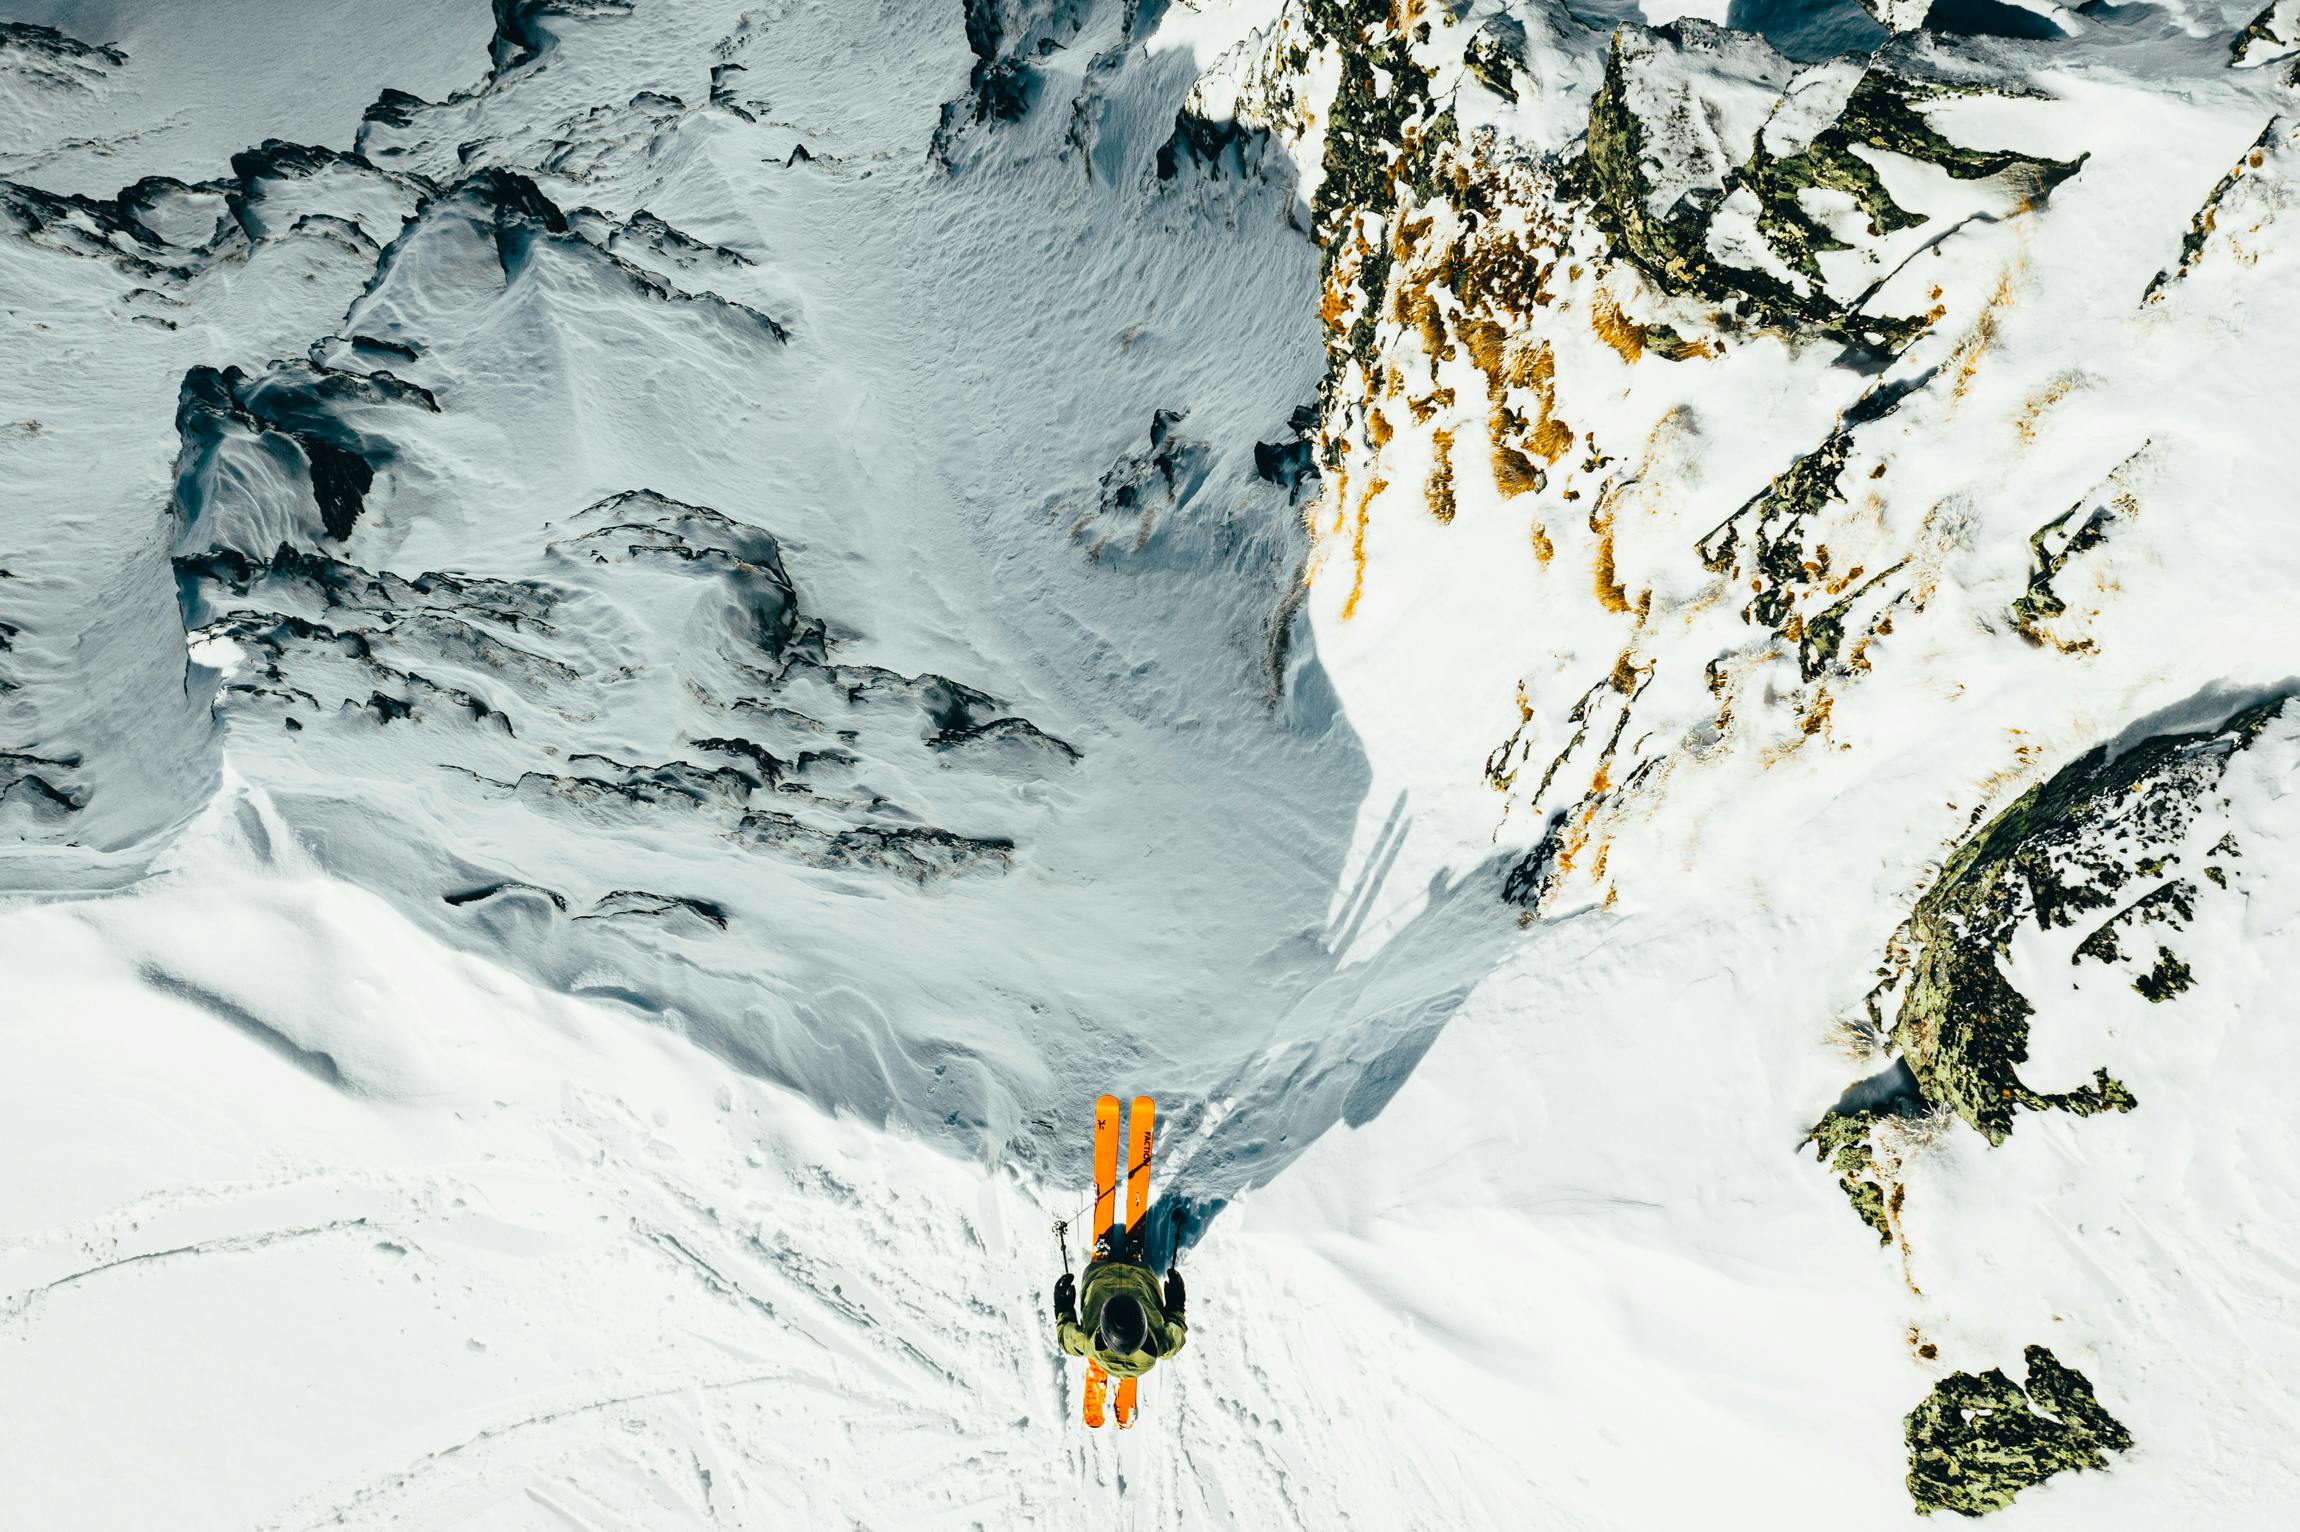 A skier on the edge of a snowy precipice